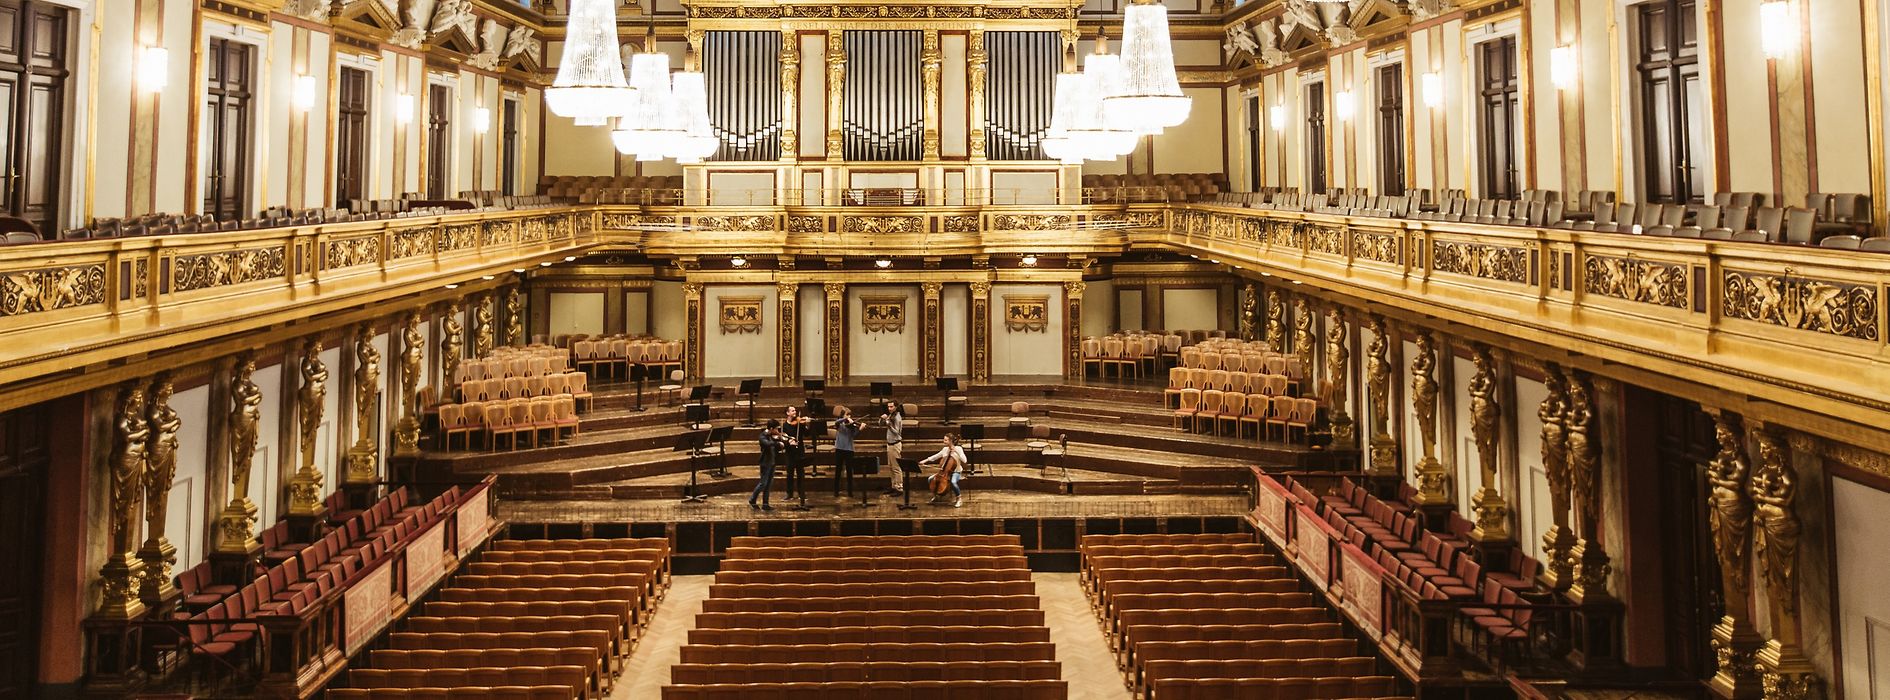 Musikverein Wien, Great Hall (golden hall)